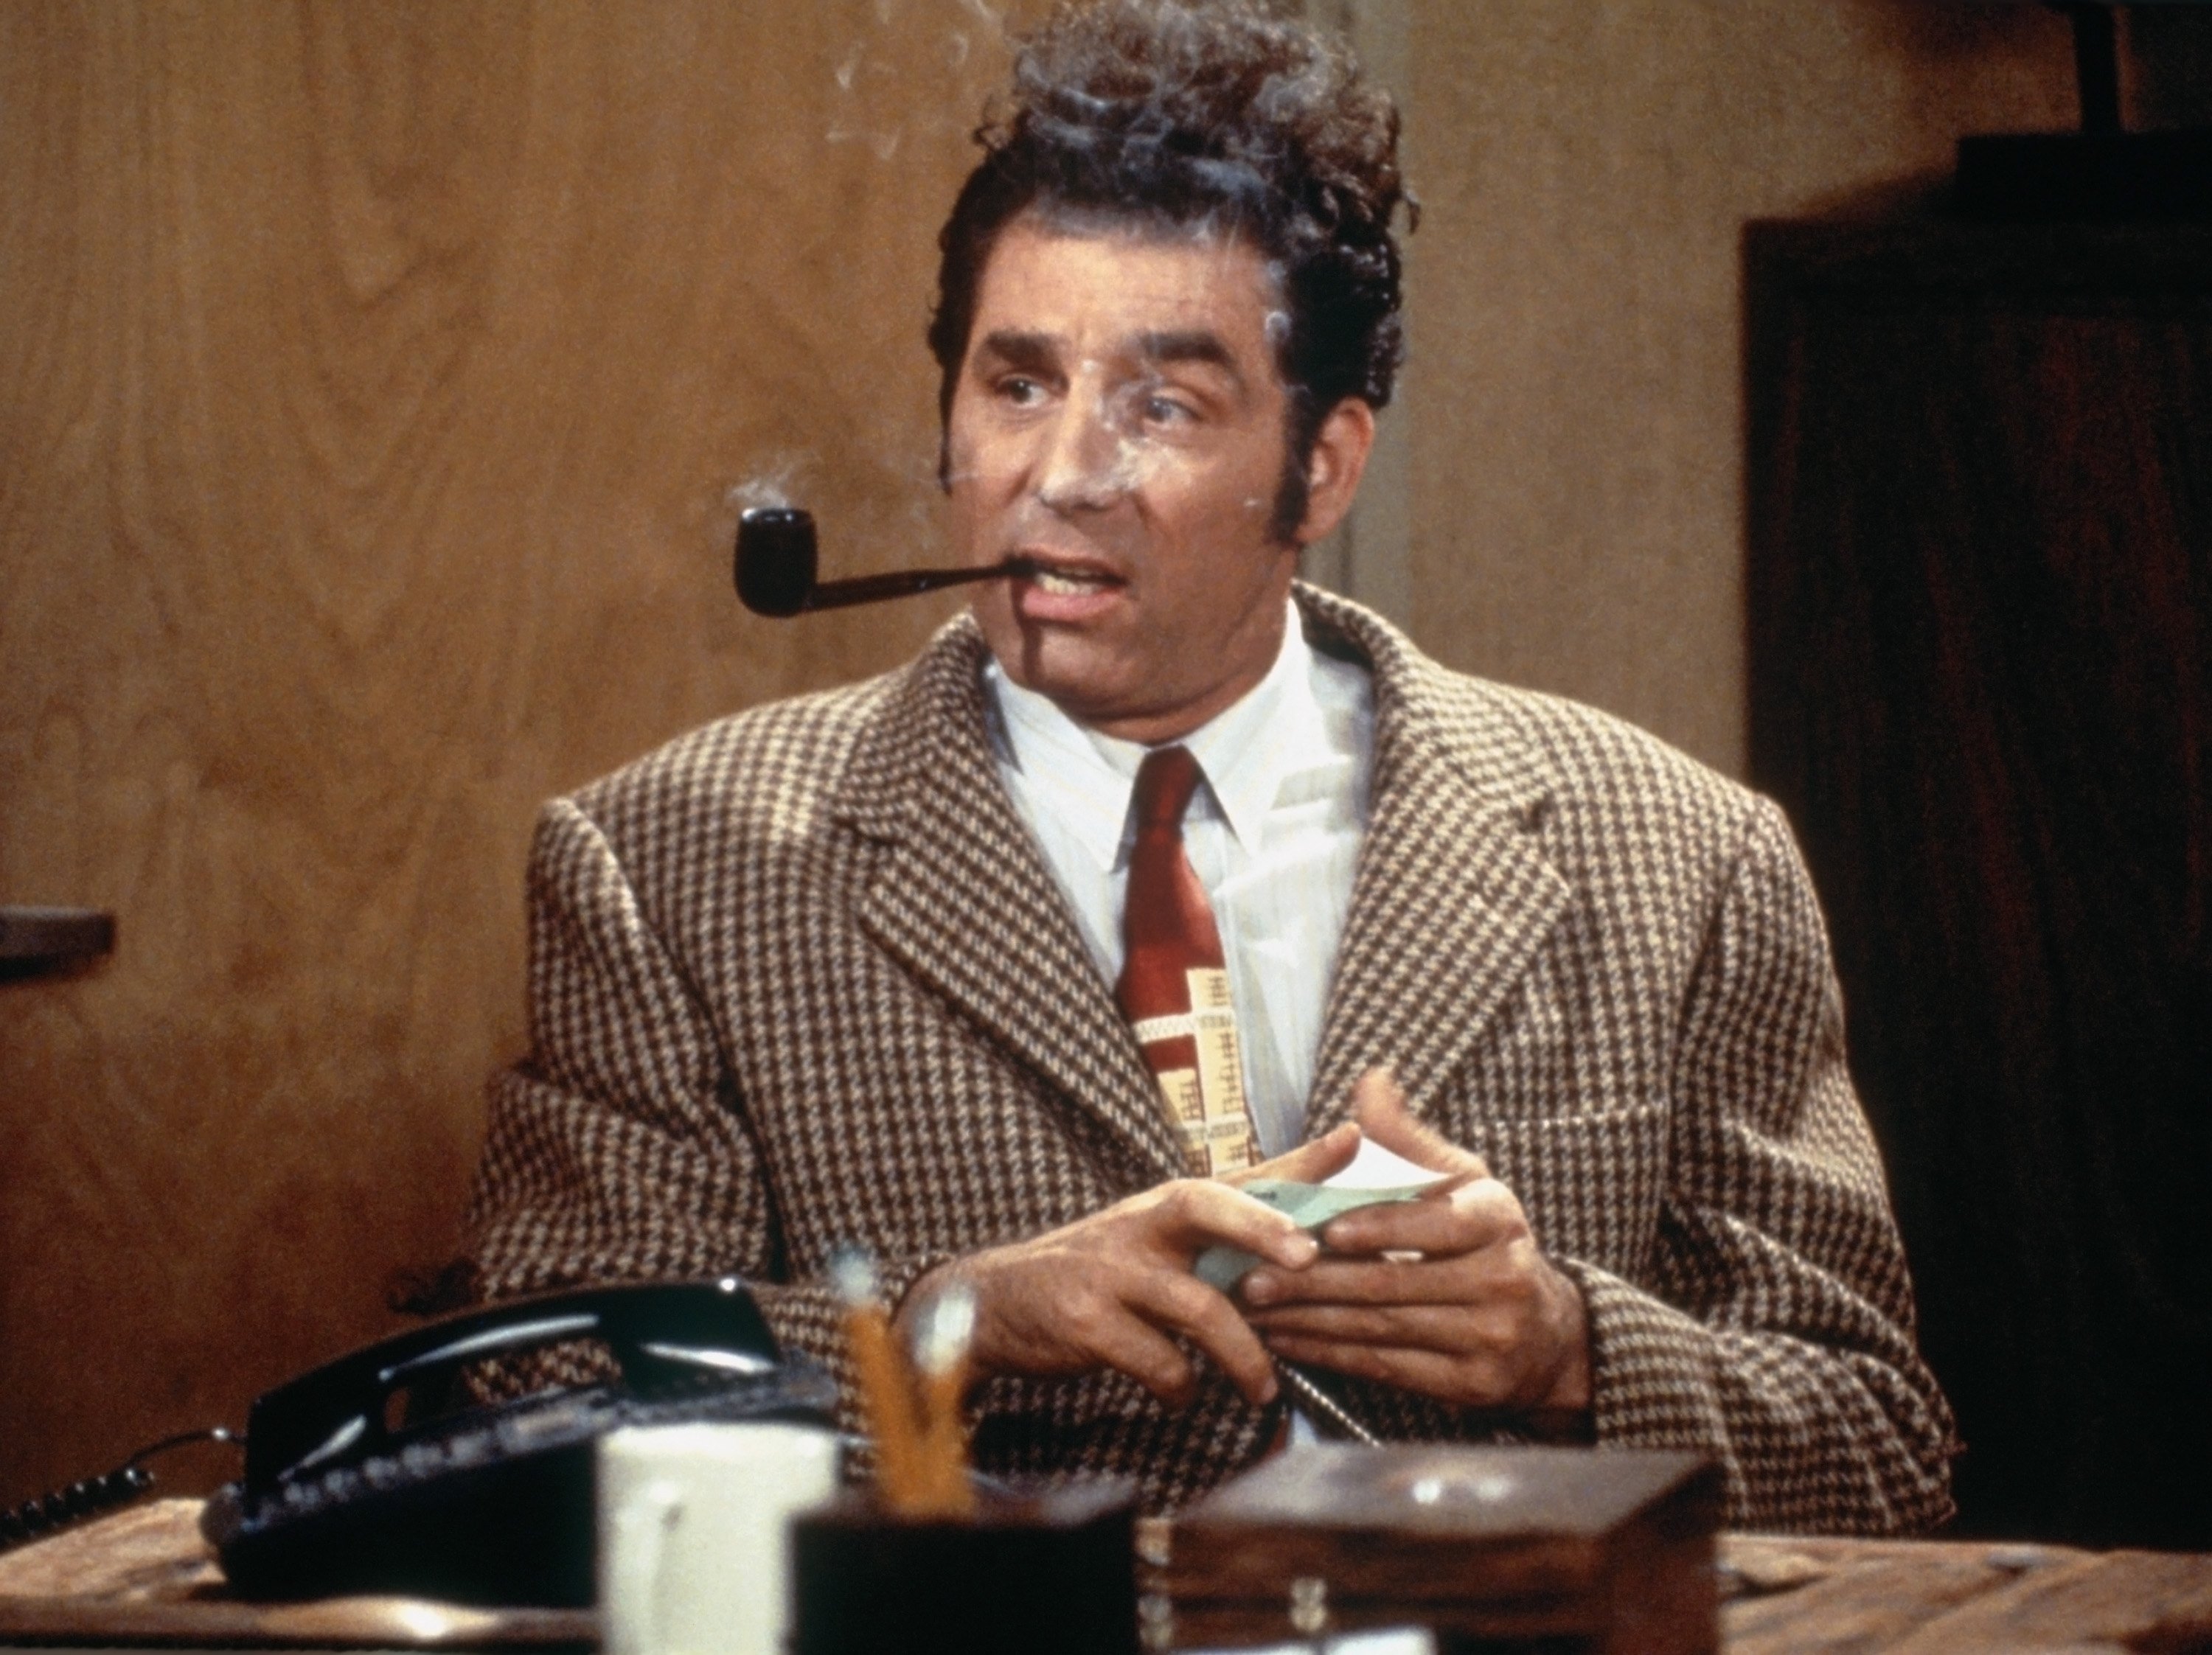 Seinfeld': How Did Kramer Make an Income?